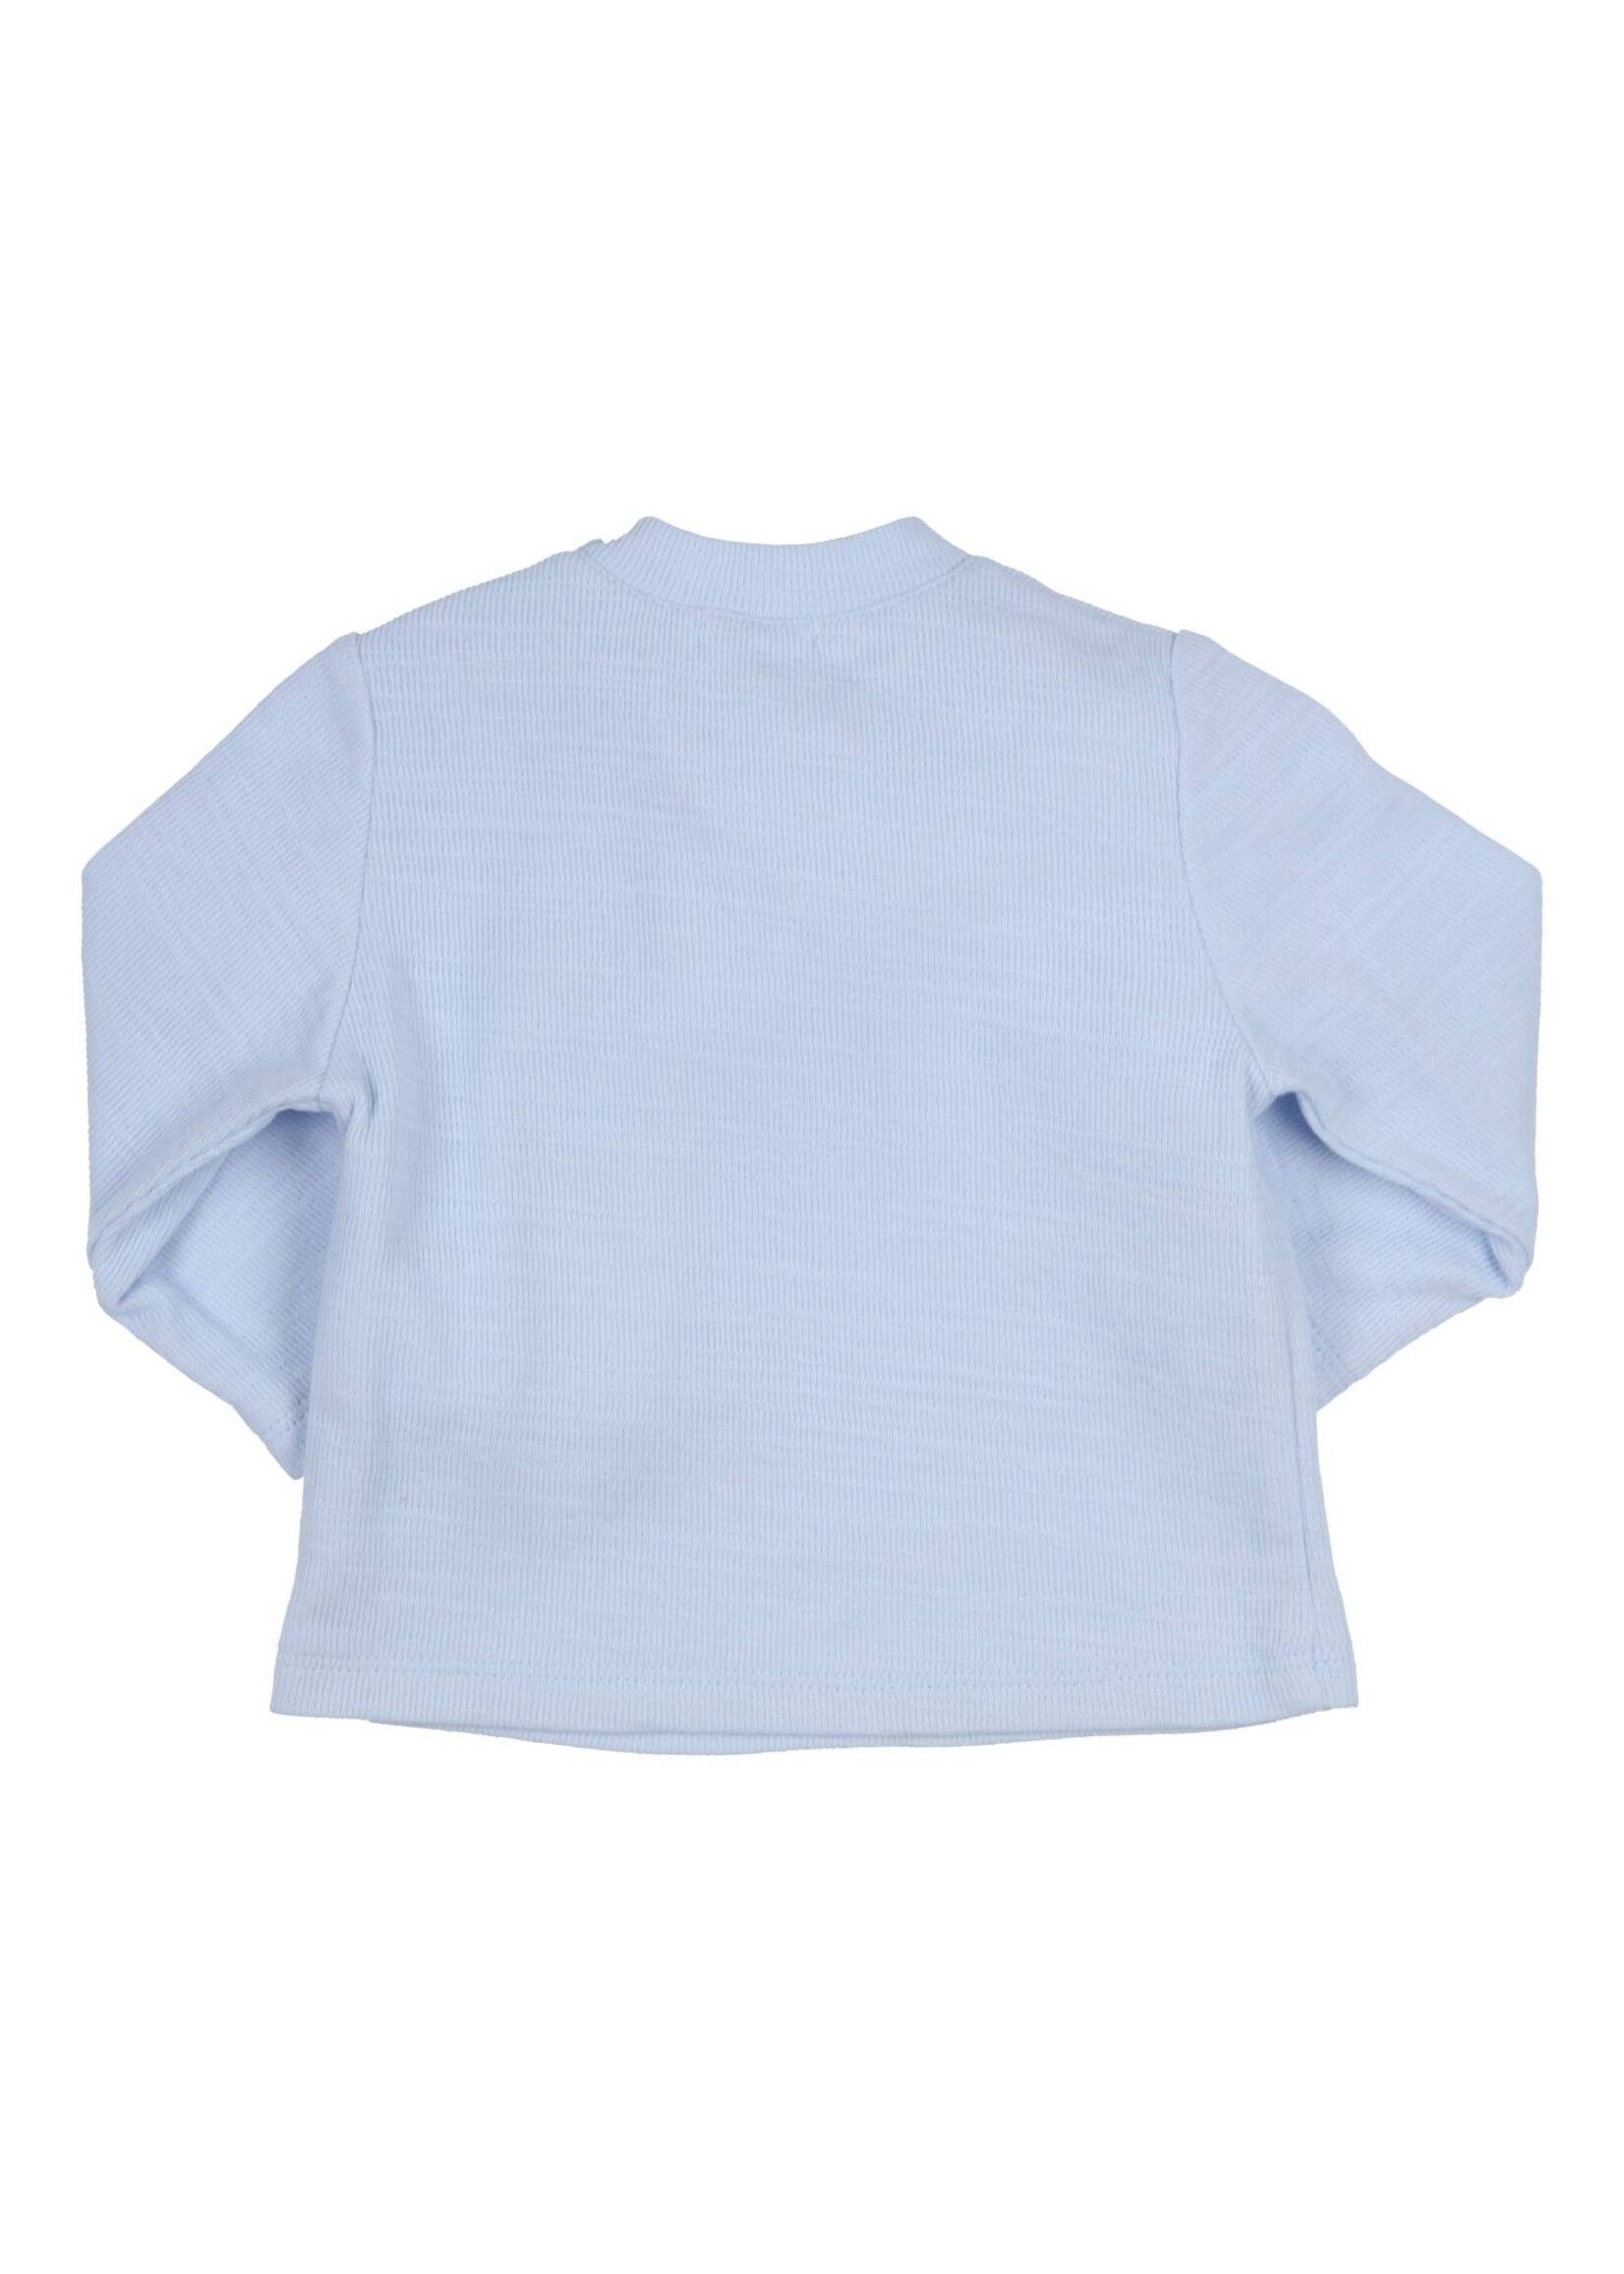 Gymp Boys Sweater Anthony 352-4460-20 Light Blue